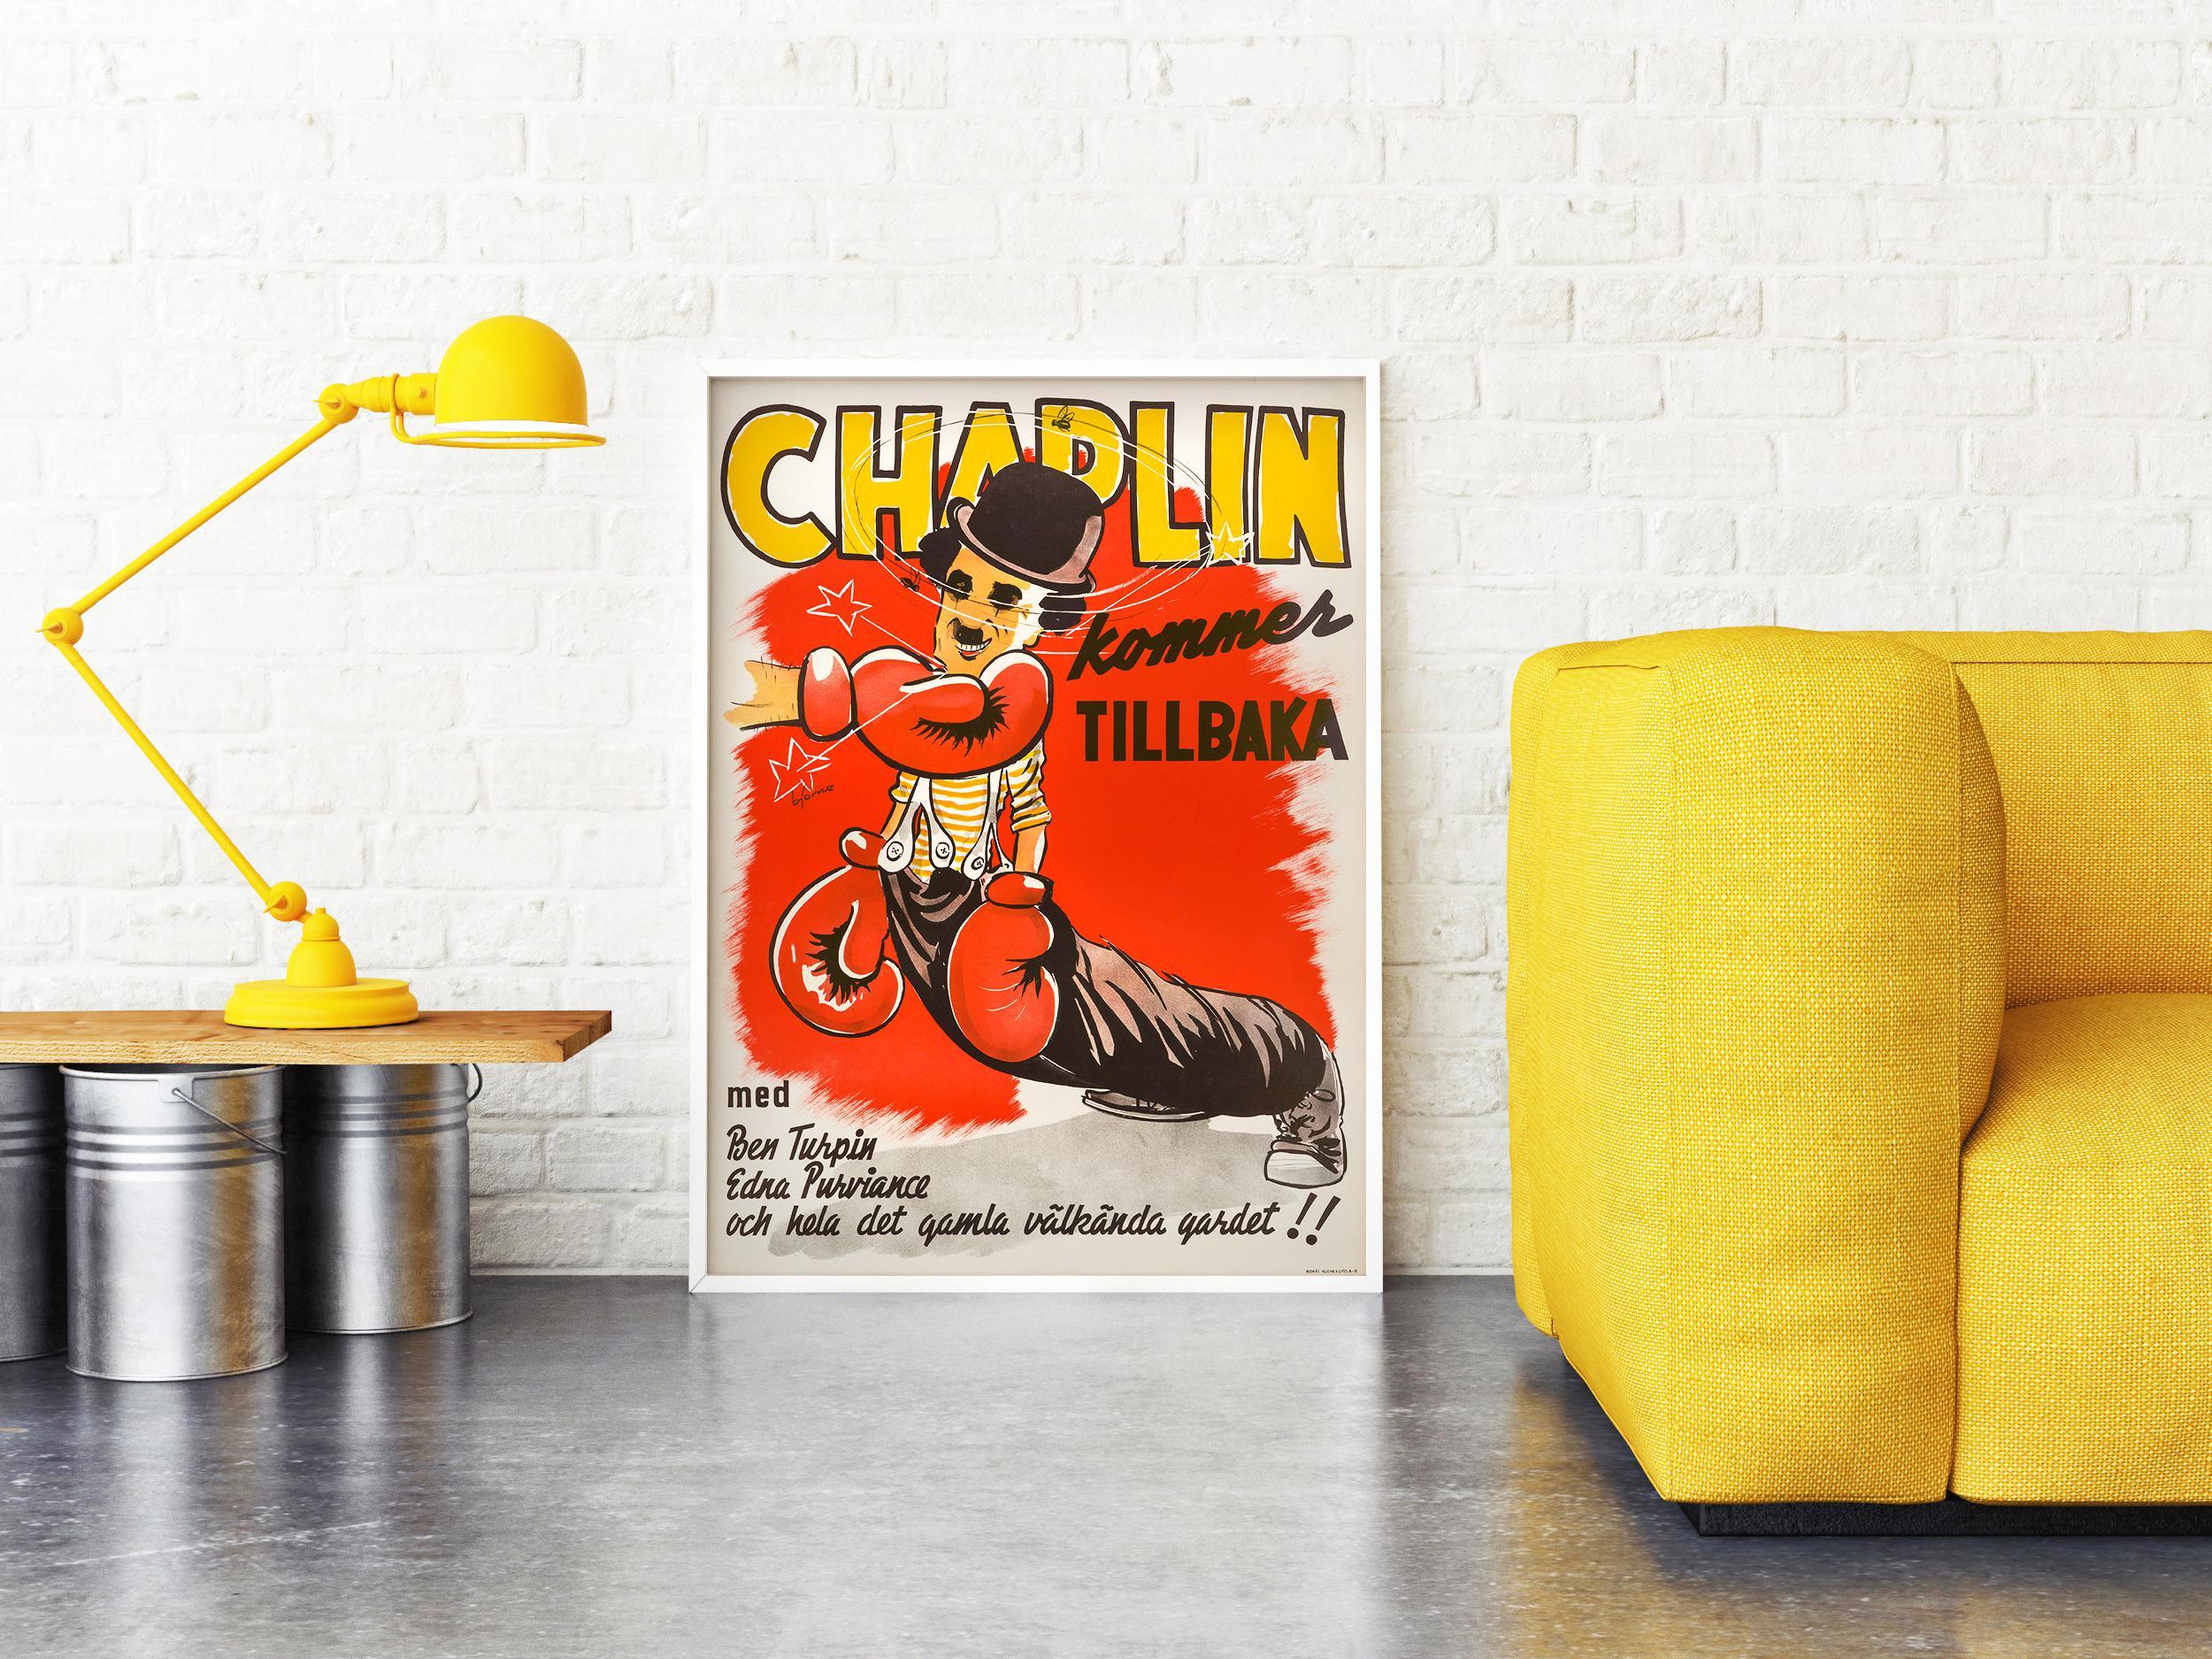 Charlie Chaplin 'The Champion' Original Vintage Movie Poster, Swedish, 1944 For Sale 1